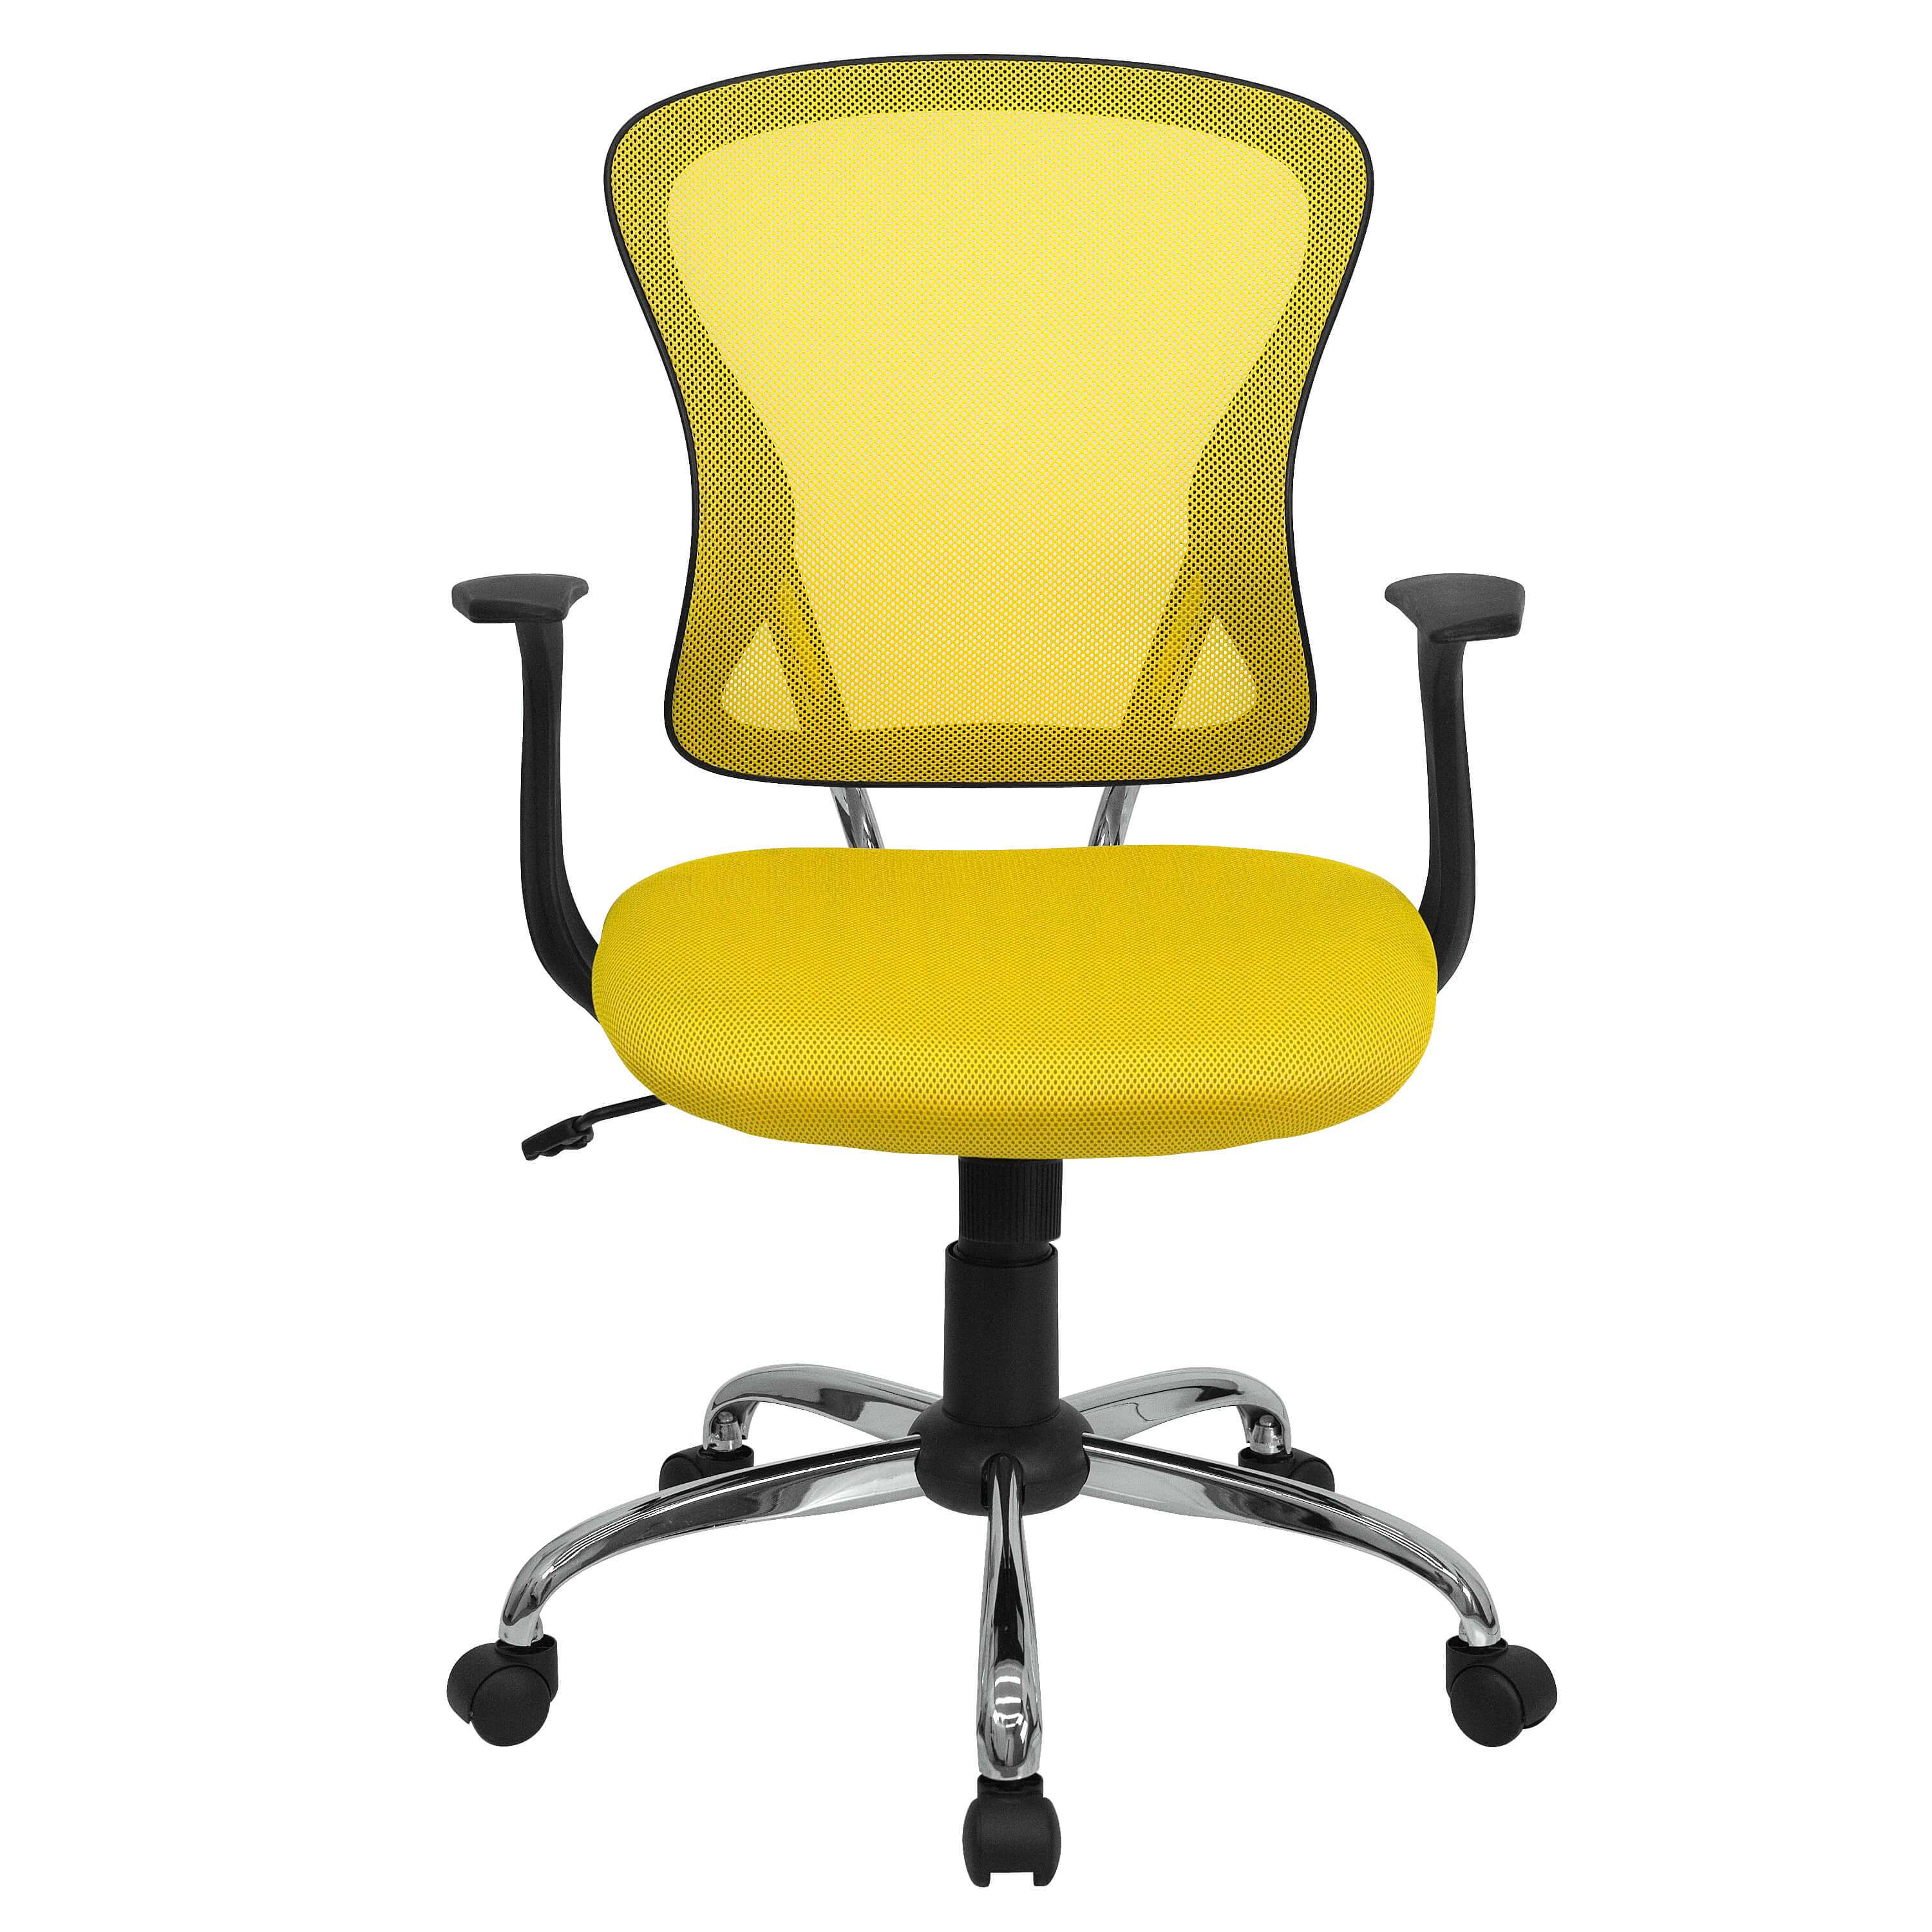 Colorful desk chairs CUB H 8369F YEL GG FLA